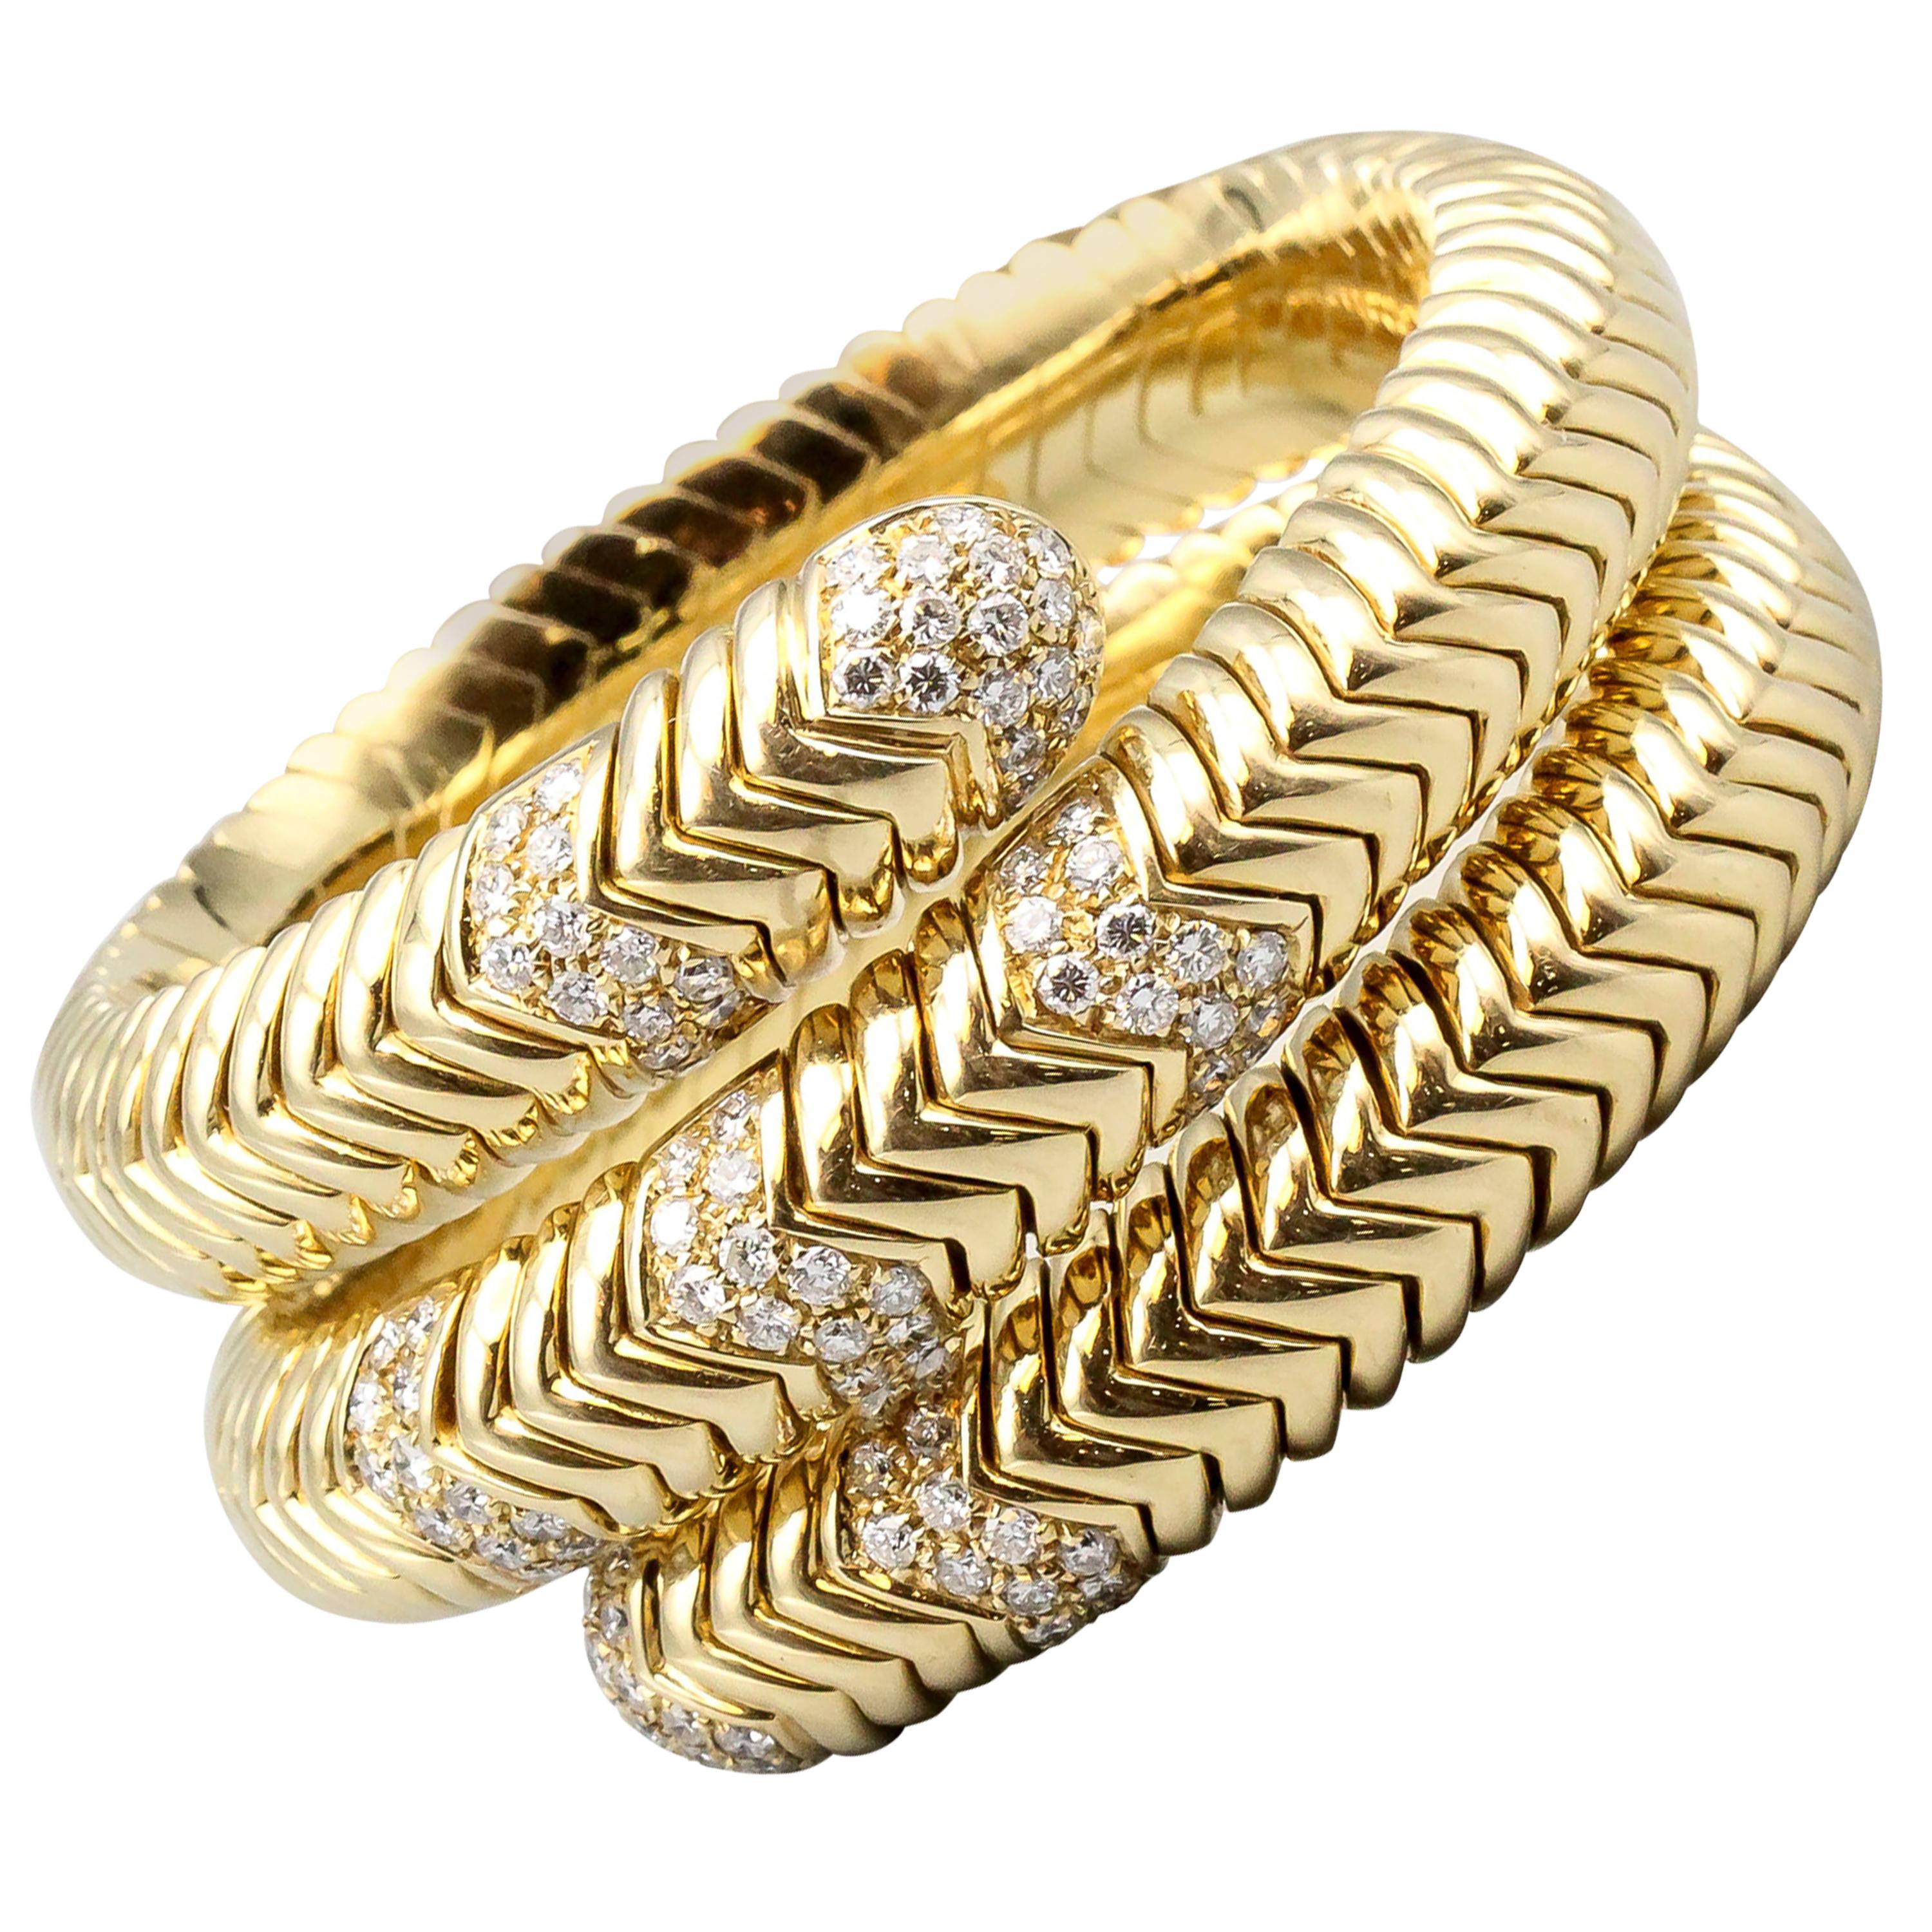 Bulgari Serpenti Viper 18k Rose Gold Bracelet Set With Onyx Elements